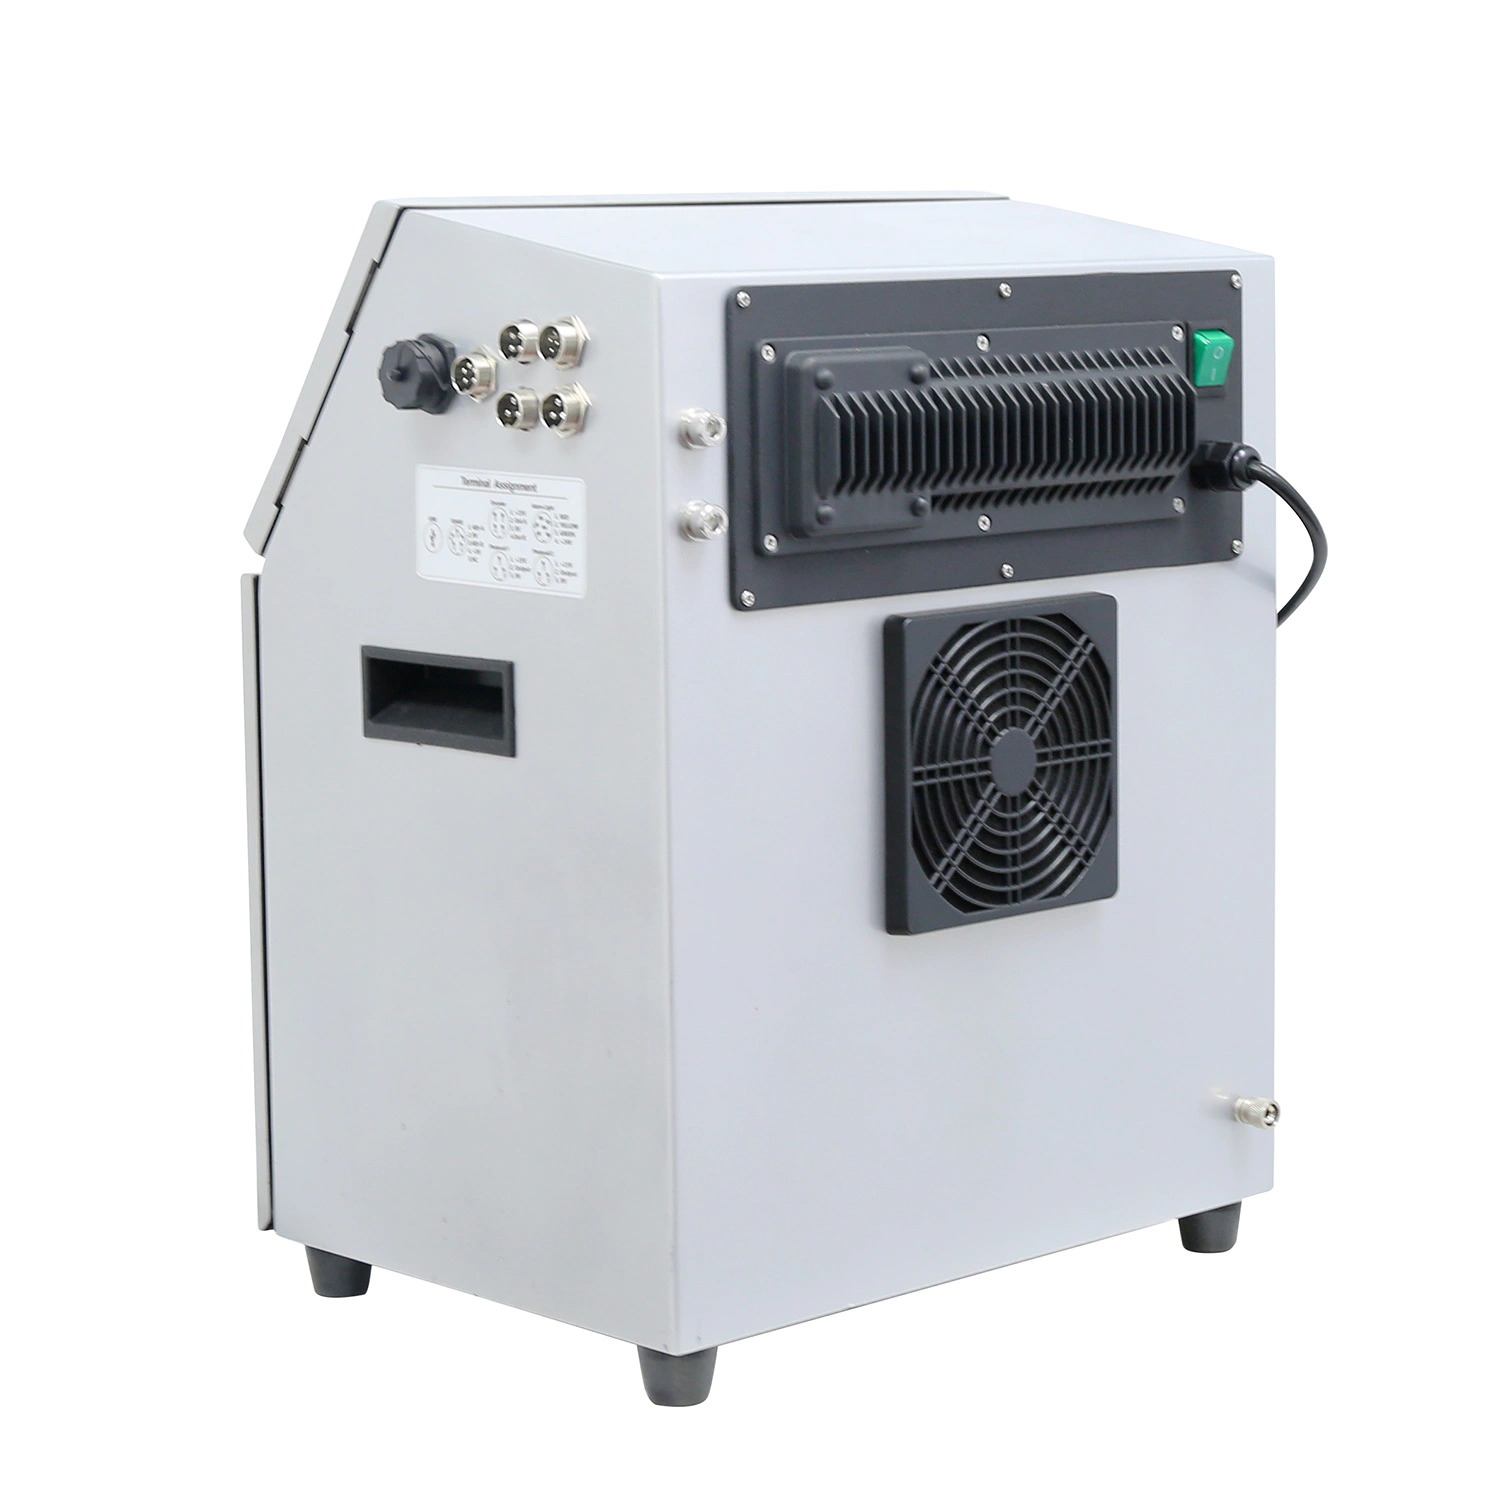 Leadtech Lt800 Wireless Printer Inkjet Digital Printing